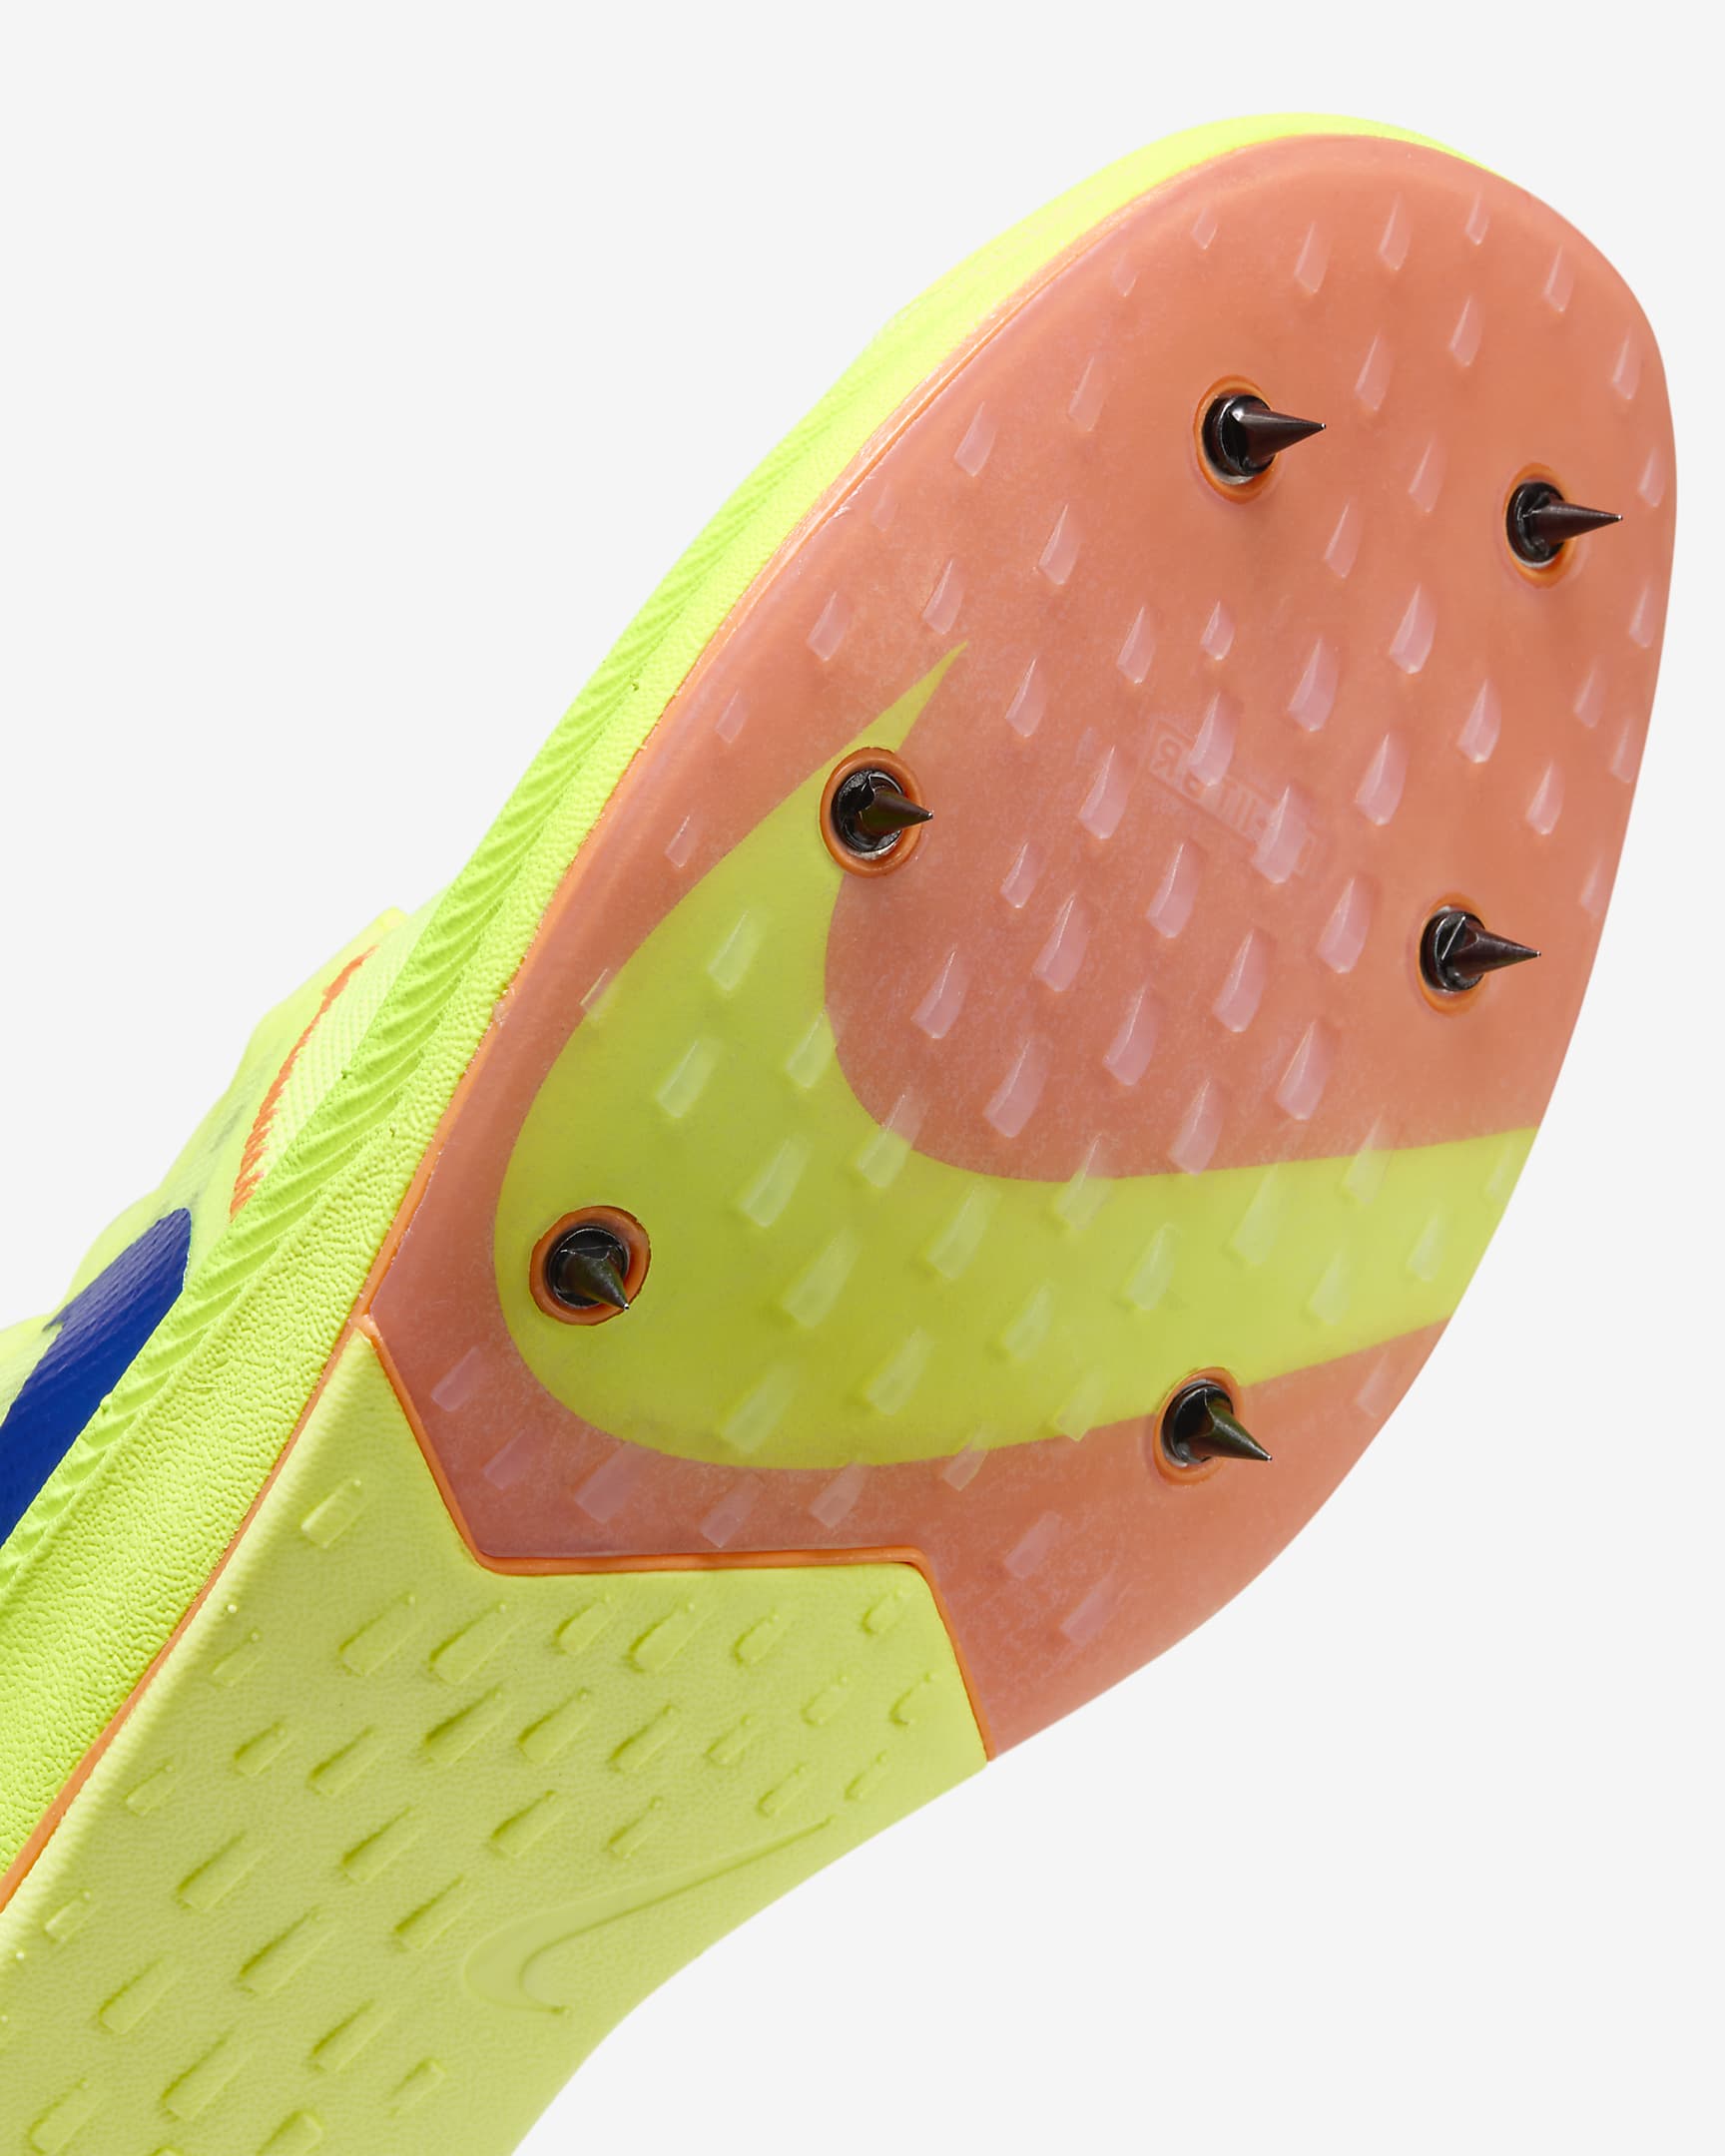 Bicos de corta-mato Nike ZoomX Dragonfly XC - Volt/Laranja Total/Laranja Total/Concord